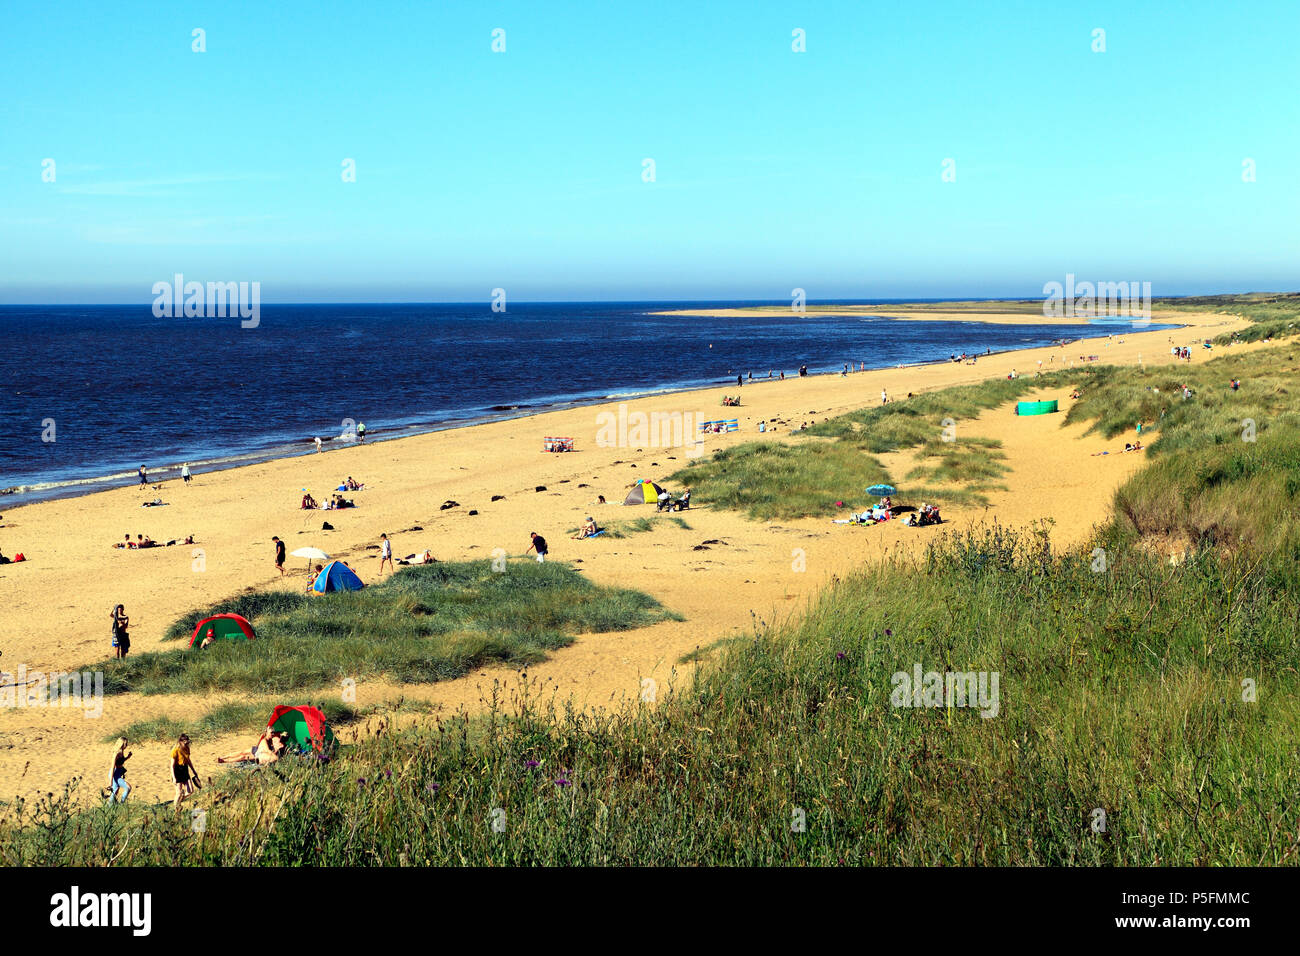 Old Hunstanton, sandy beach, sunbathing, bay, North Sea coast, Norfolk, England,UK Stock Photo